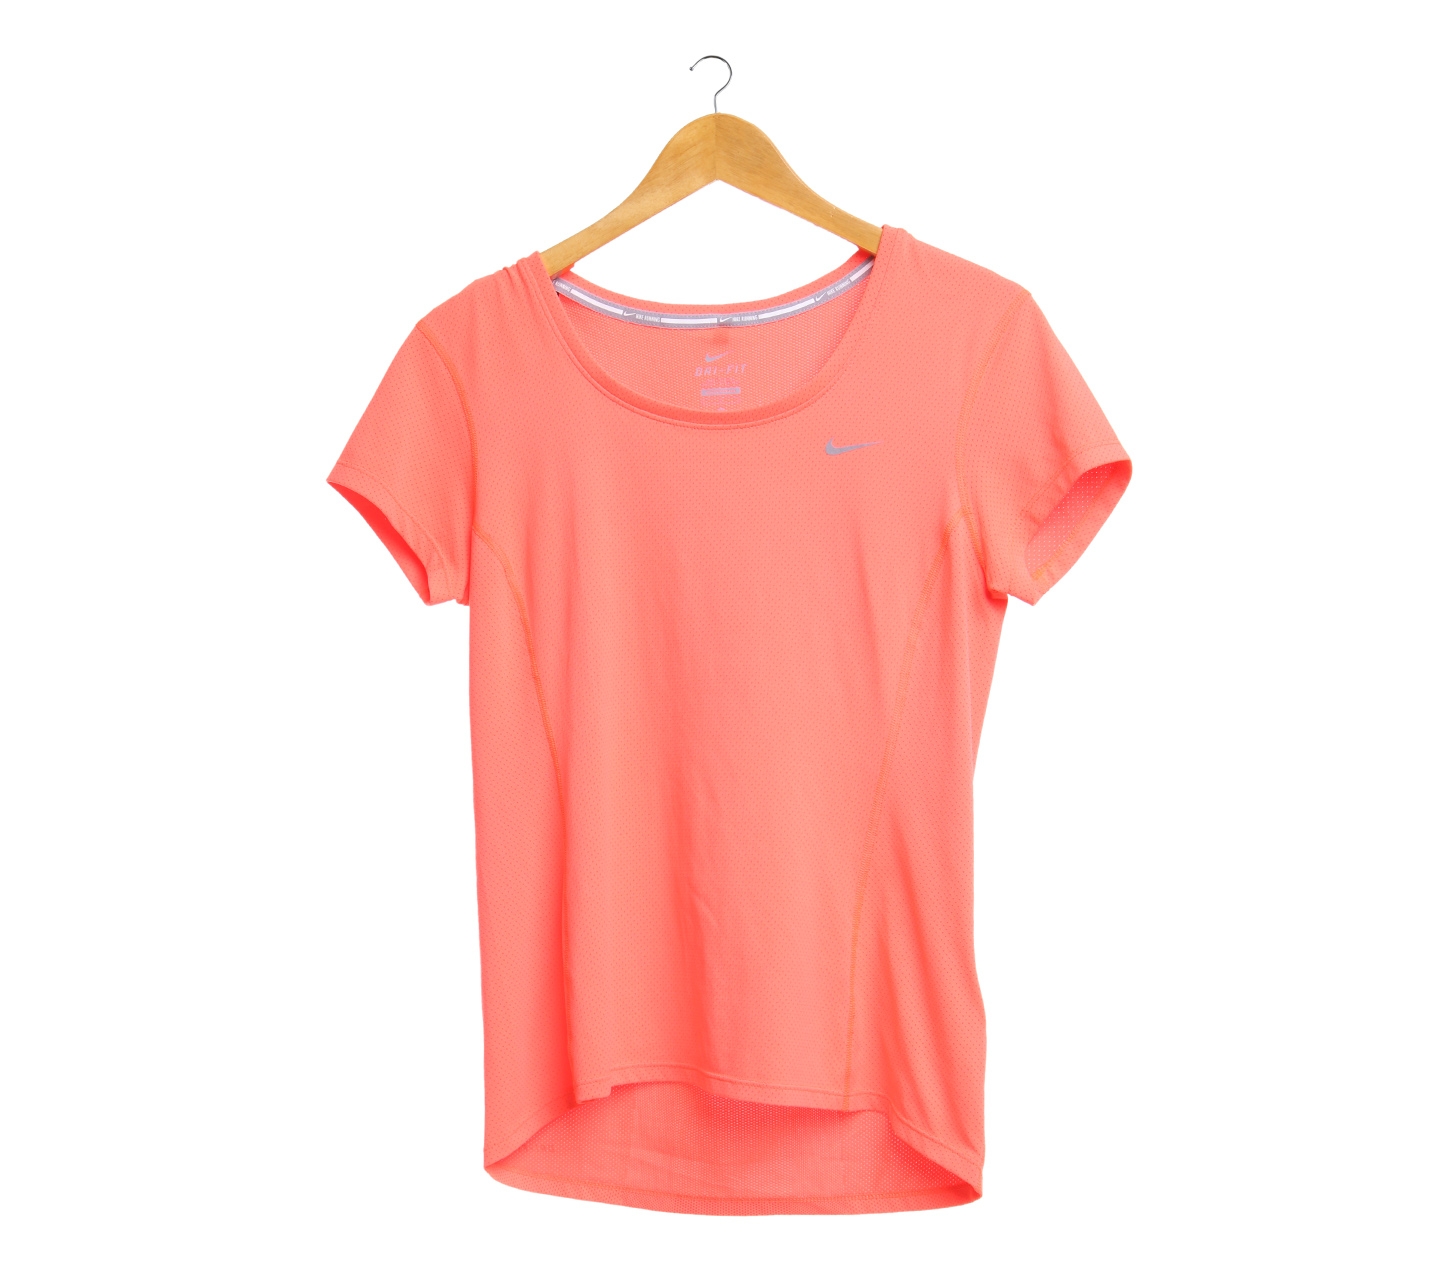 Nike Orange Neon T-Shirt